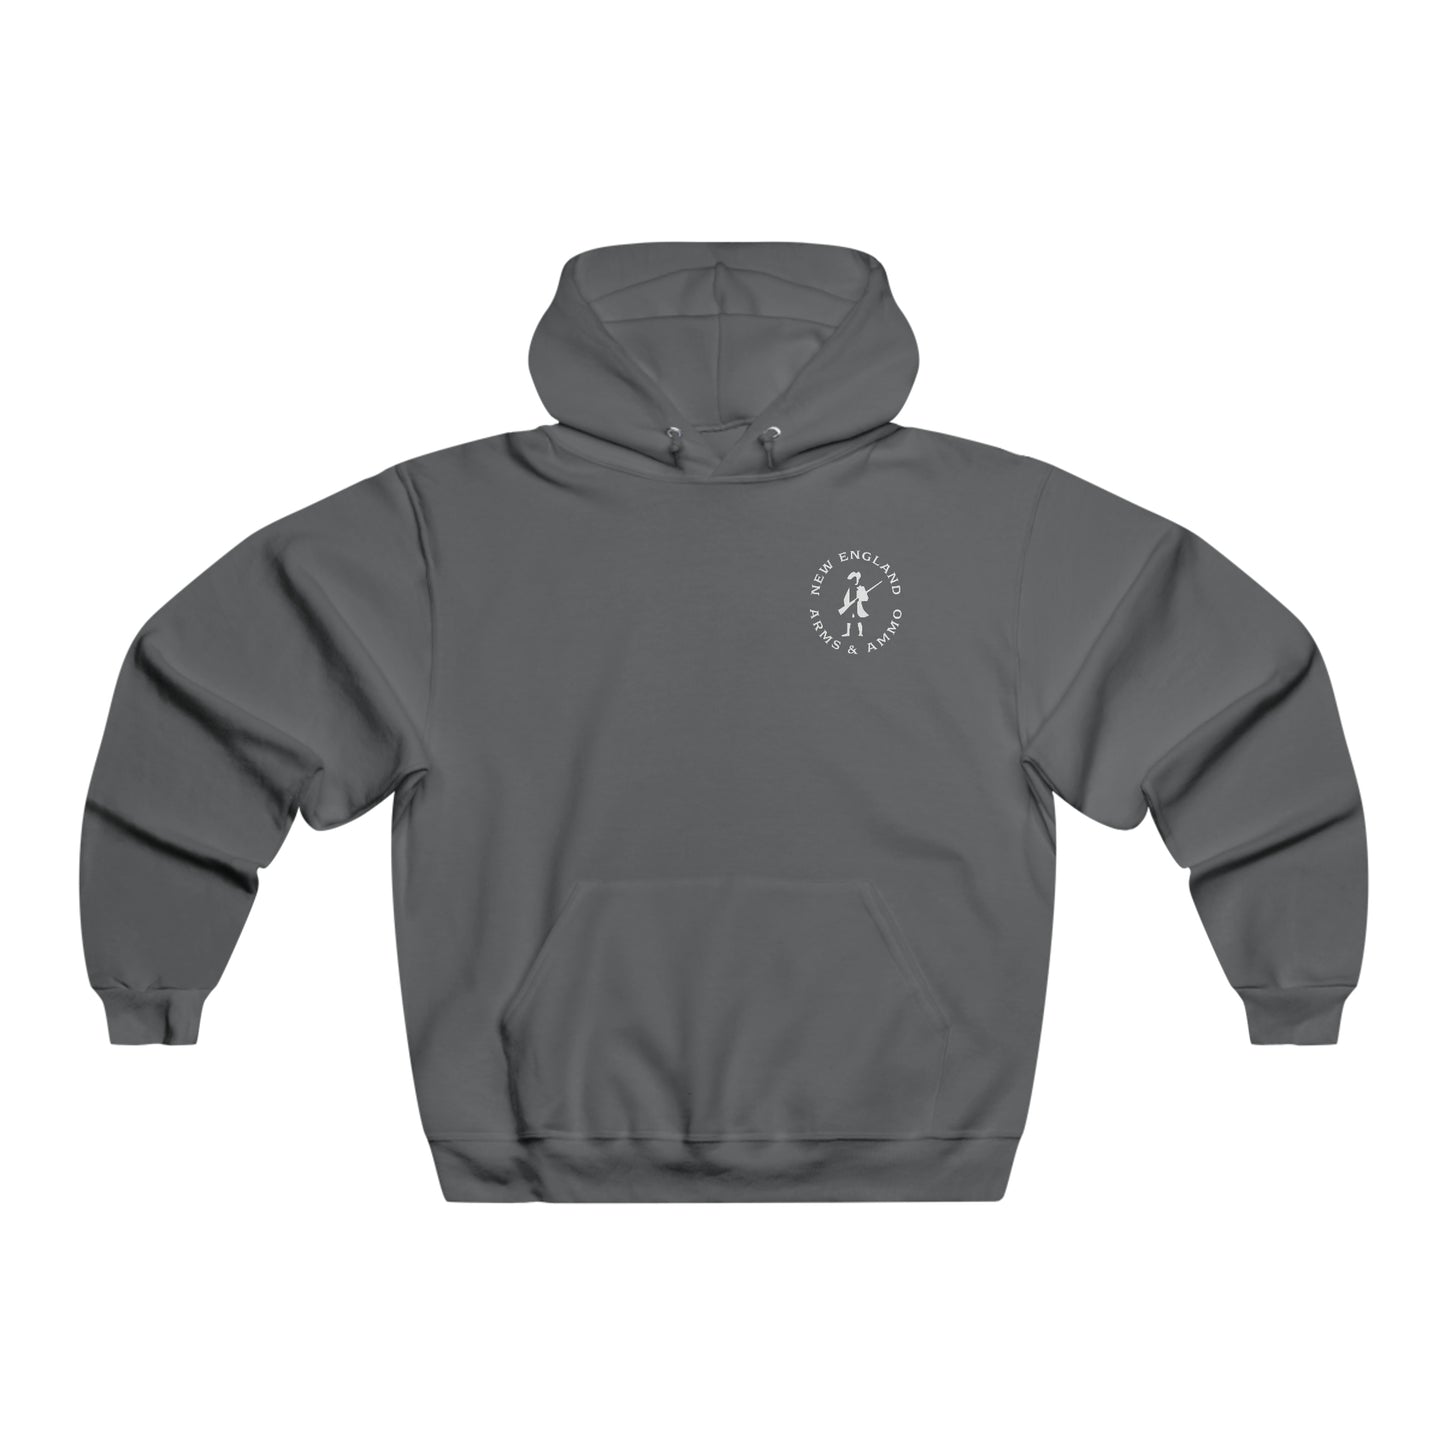 New England Arms Men's NUBLEND® Hooded Sweatshirt